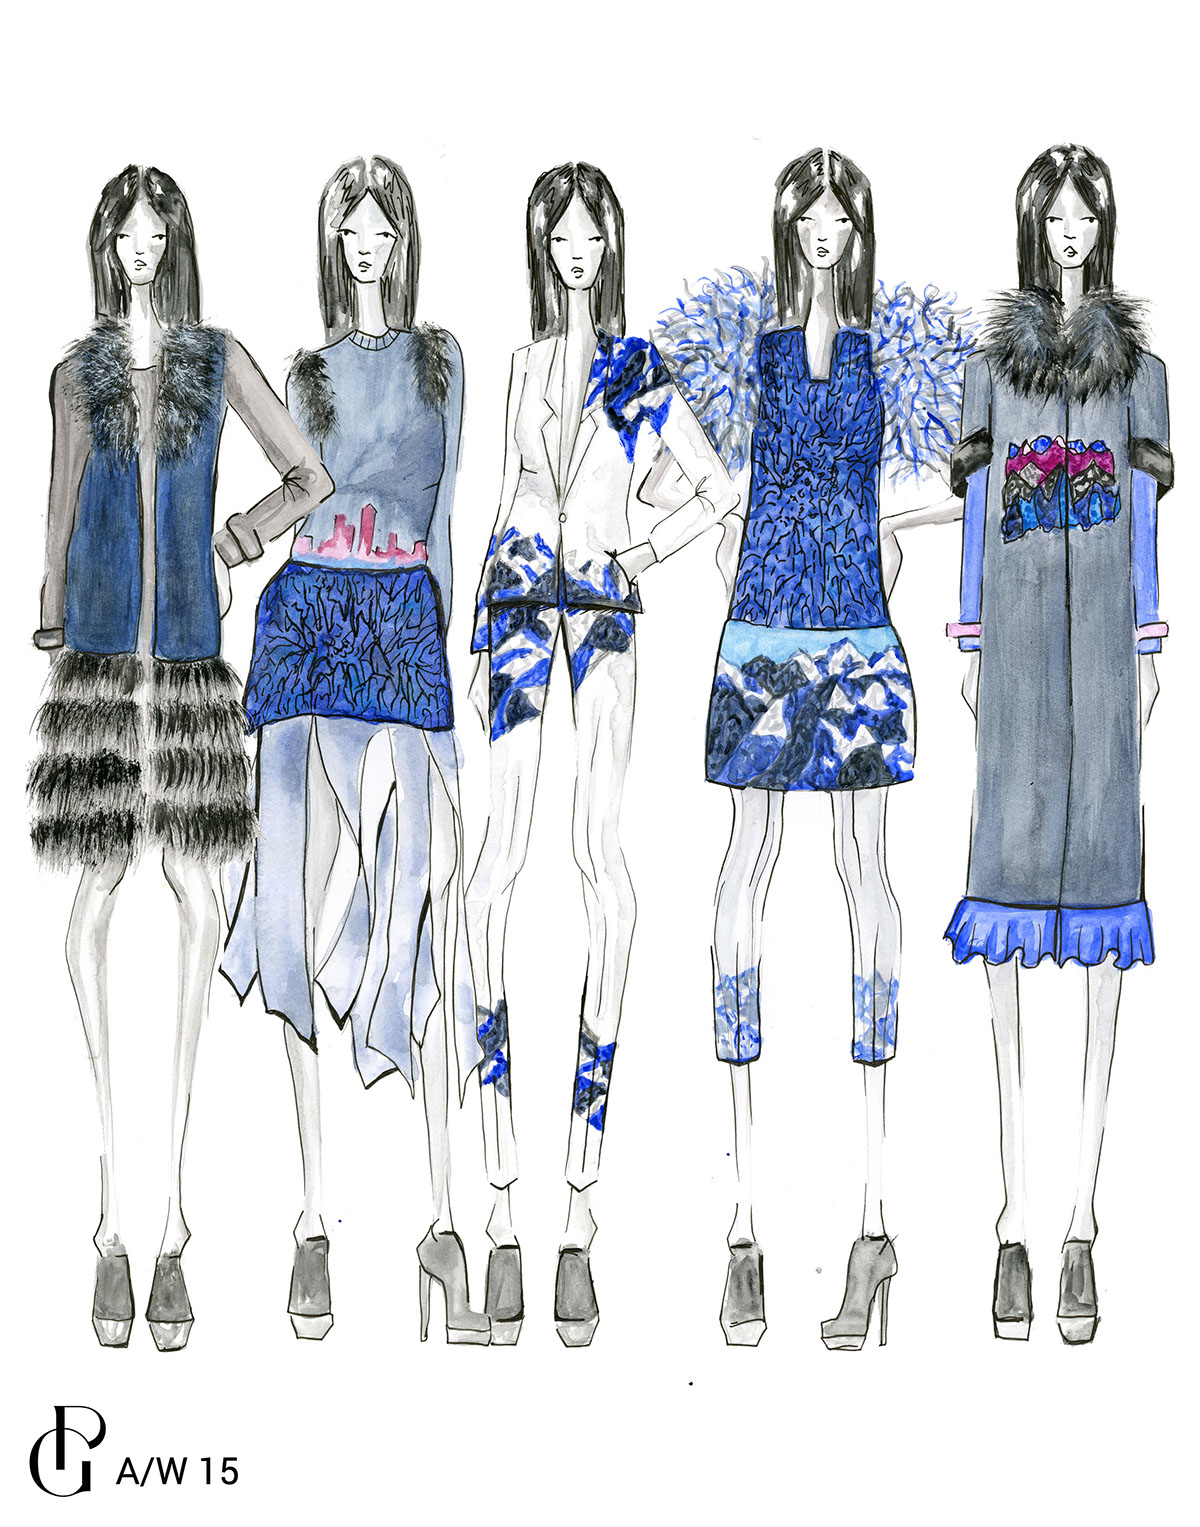 prabalgurung fashiondesign design Collection aw15 himalayas mountains digitalprint silkdye silkprinting blue SILK newyork jessicaferreira ferreira